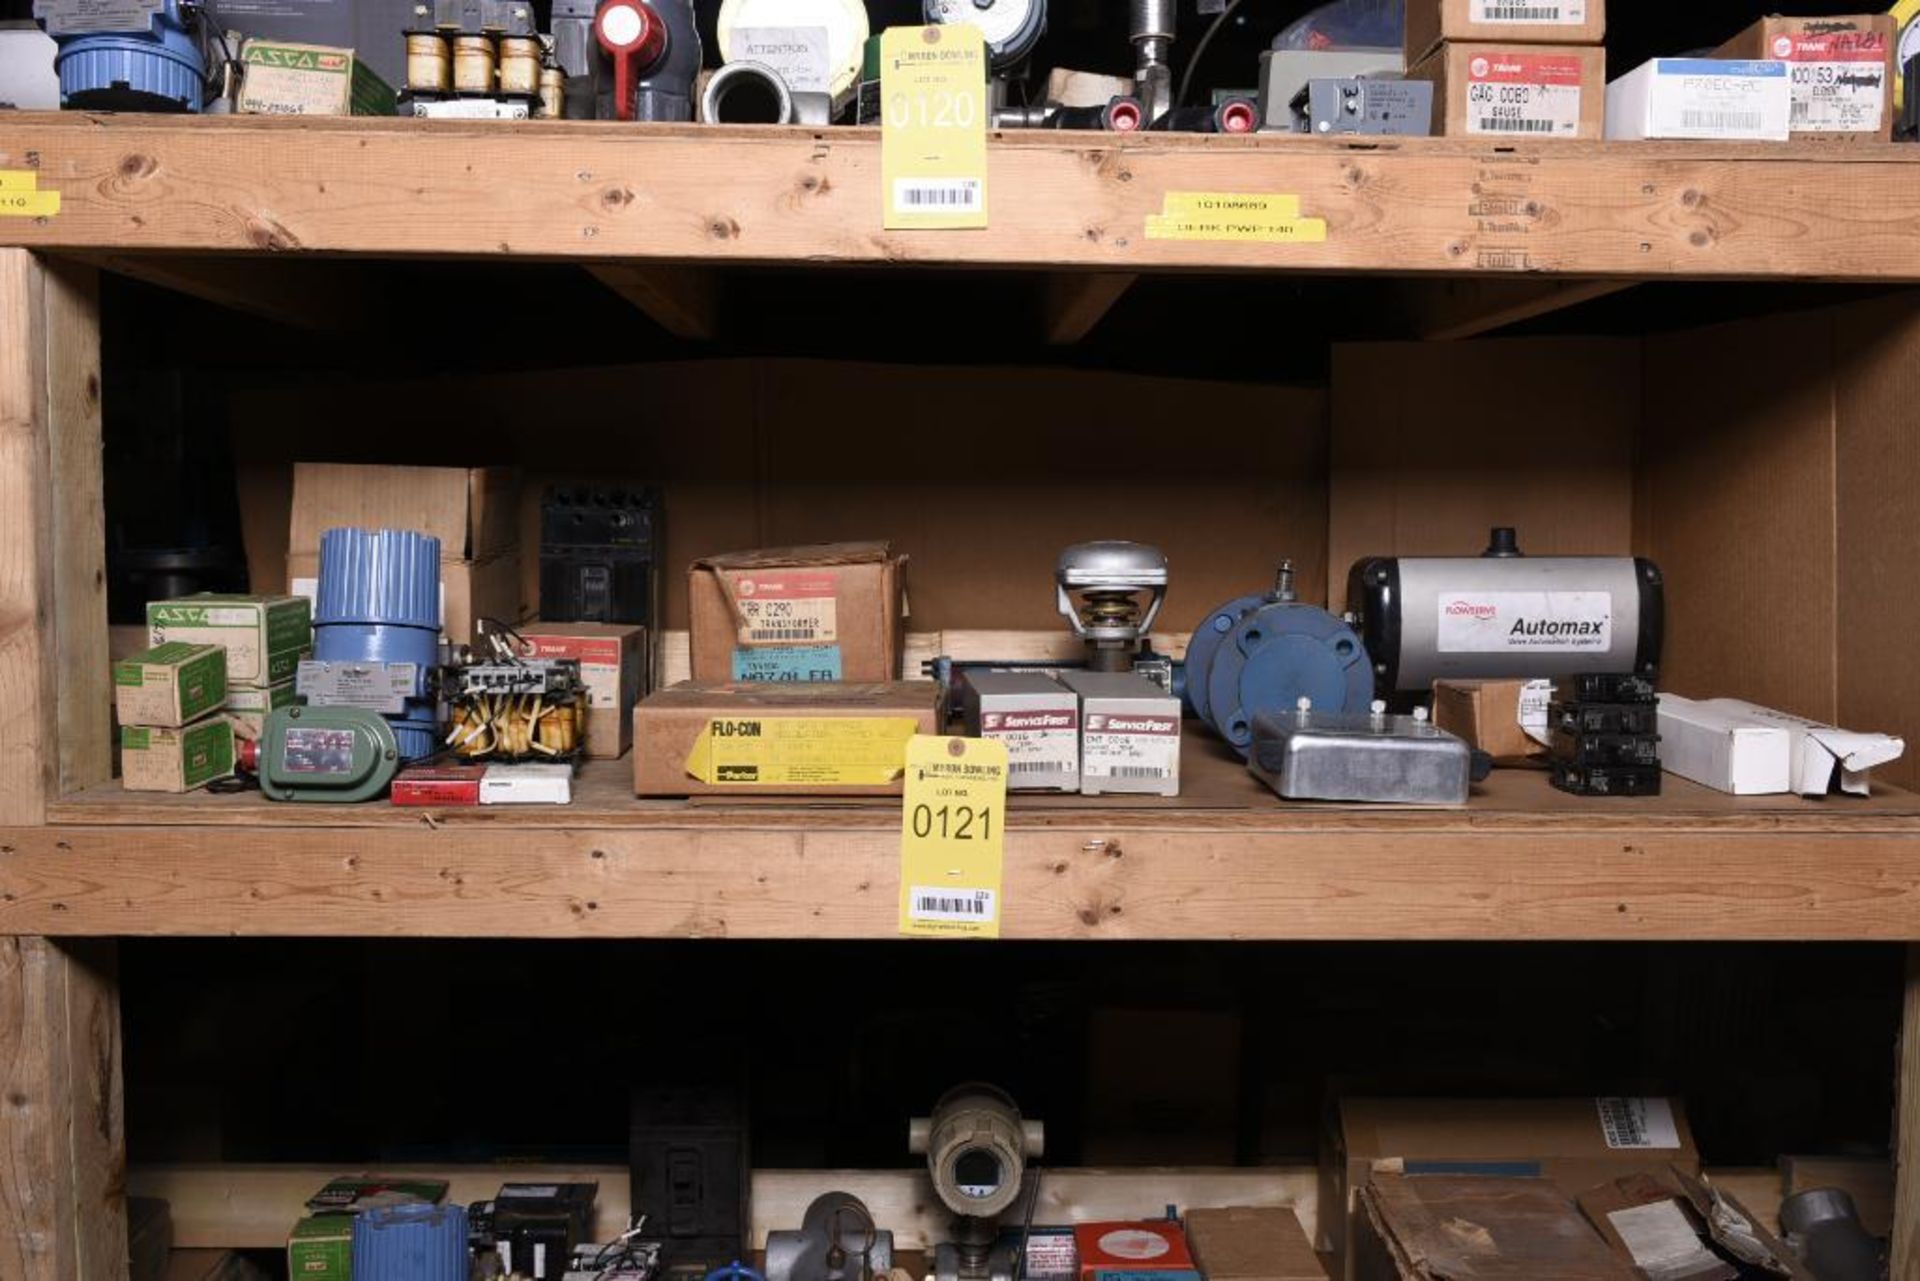 Shelf of Miscellaneous MRO, Valves, Electrical, Motors, Indicators, Pumps (Flowserve, Trane, Rosemou